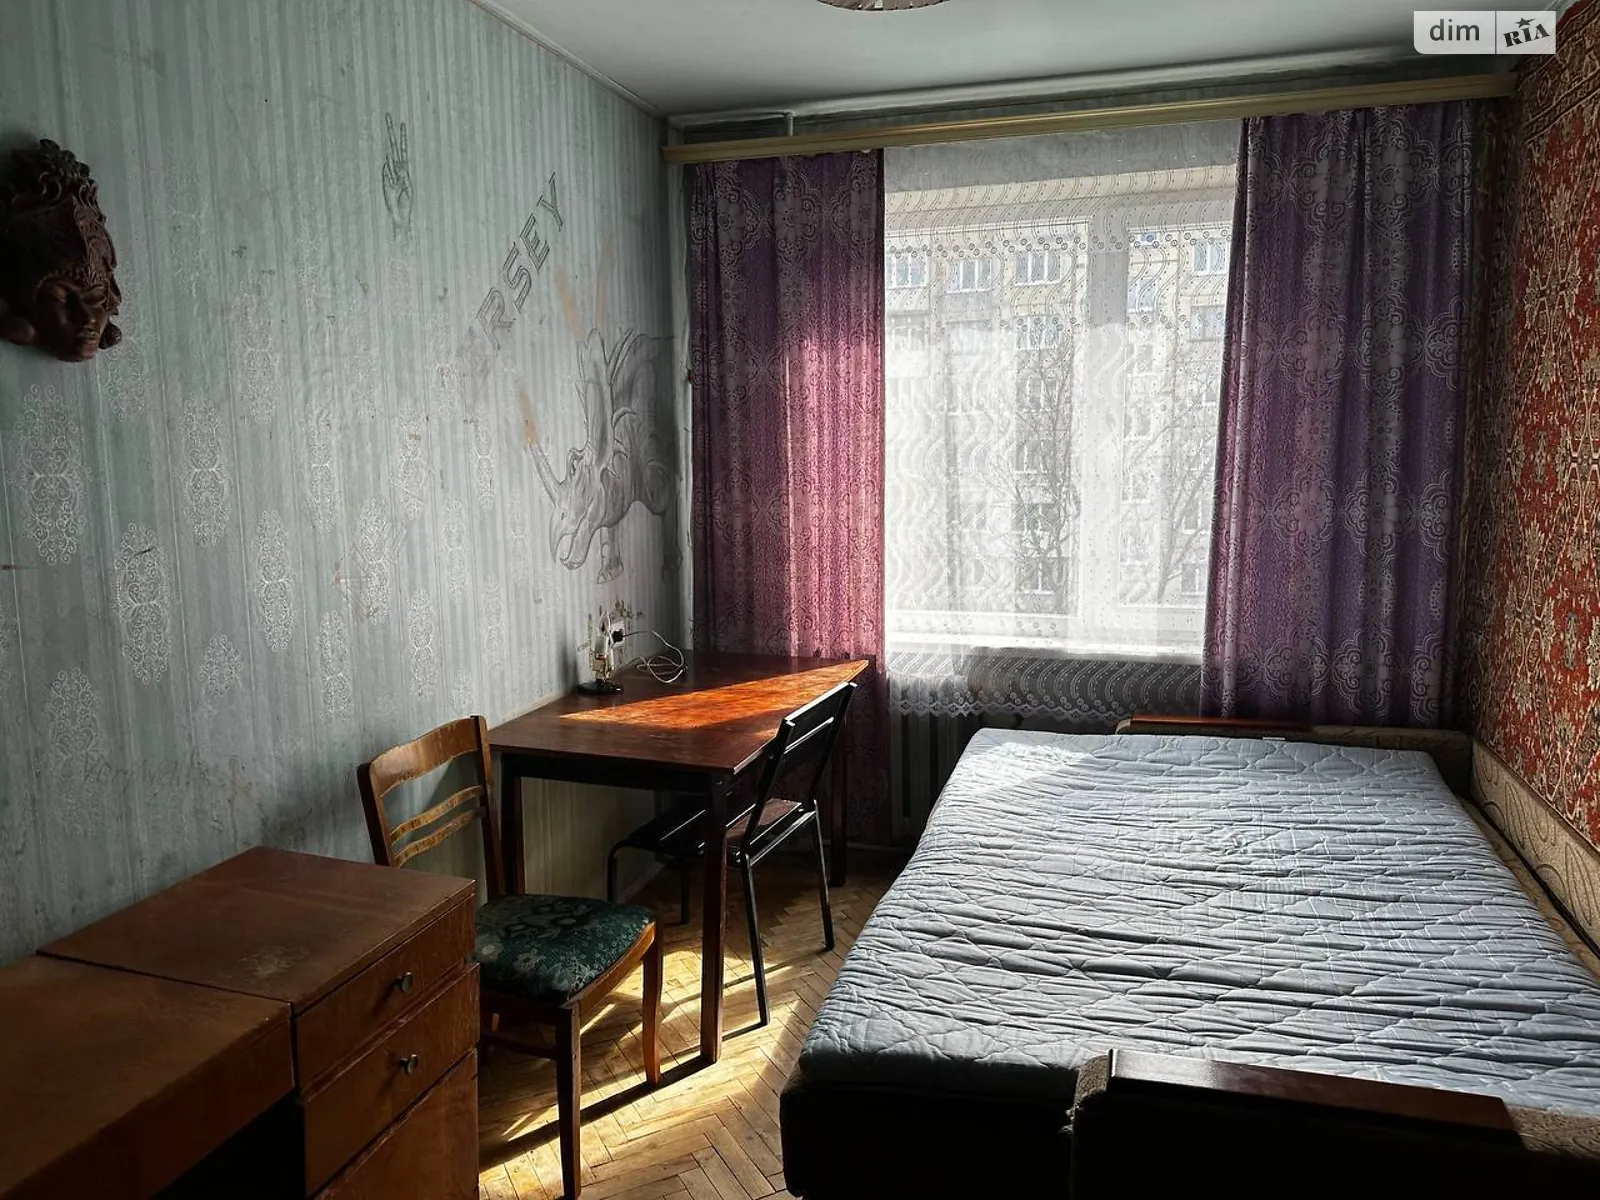 Сдается в аренду комната 30 кв. м в Львове - фото 3